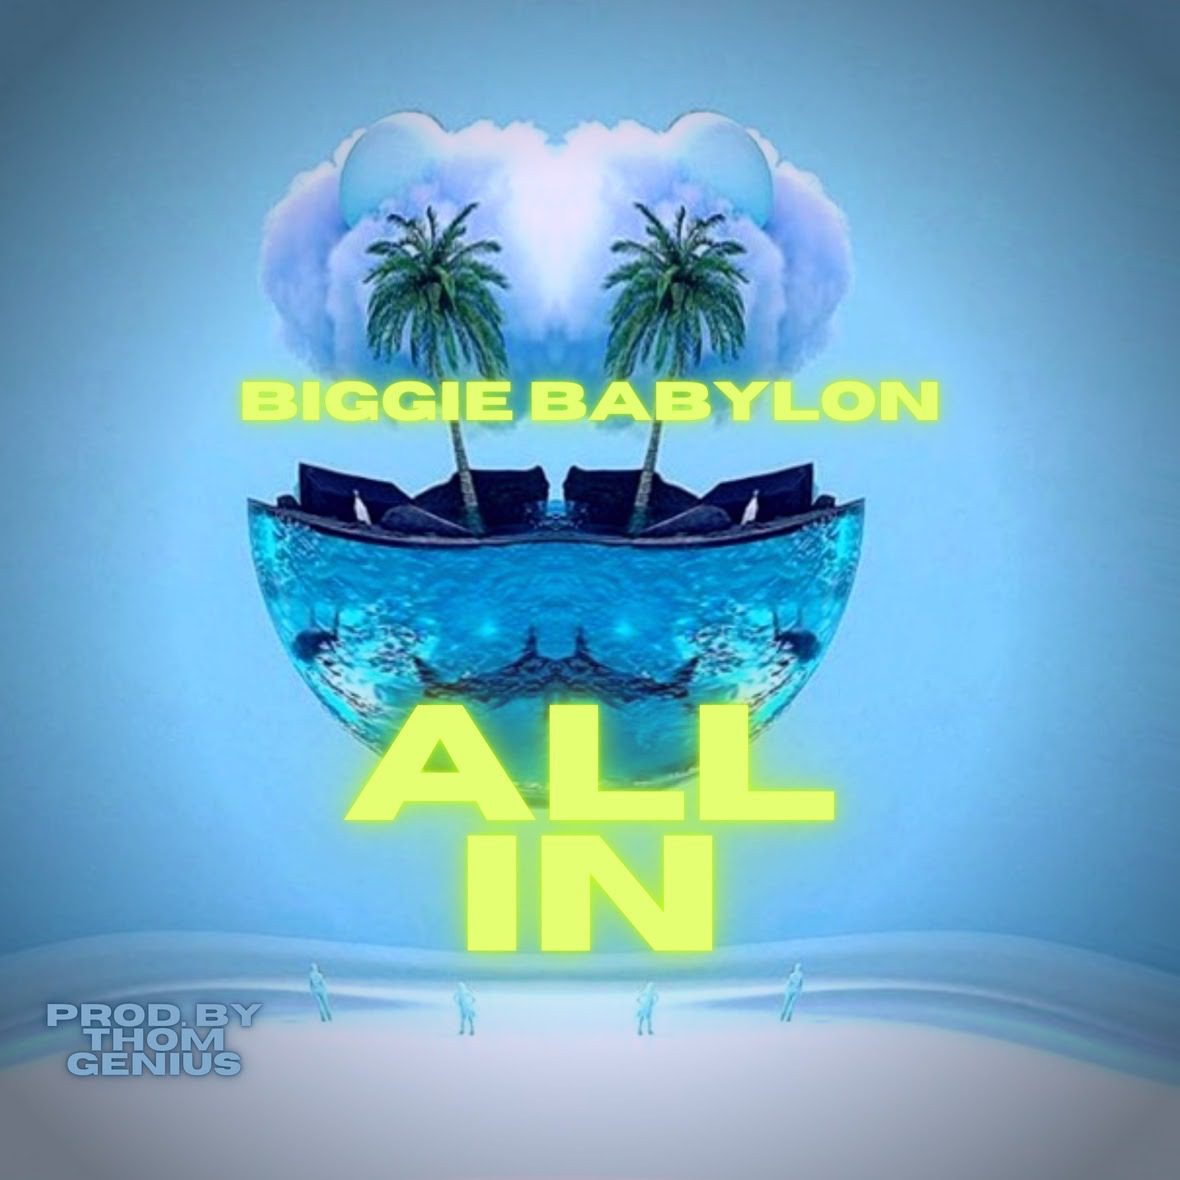 Biggie Babylon Drops Music Video For “All In”